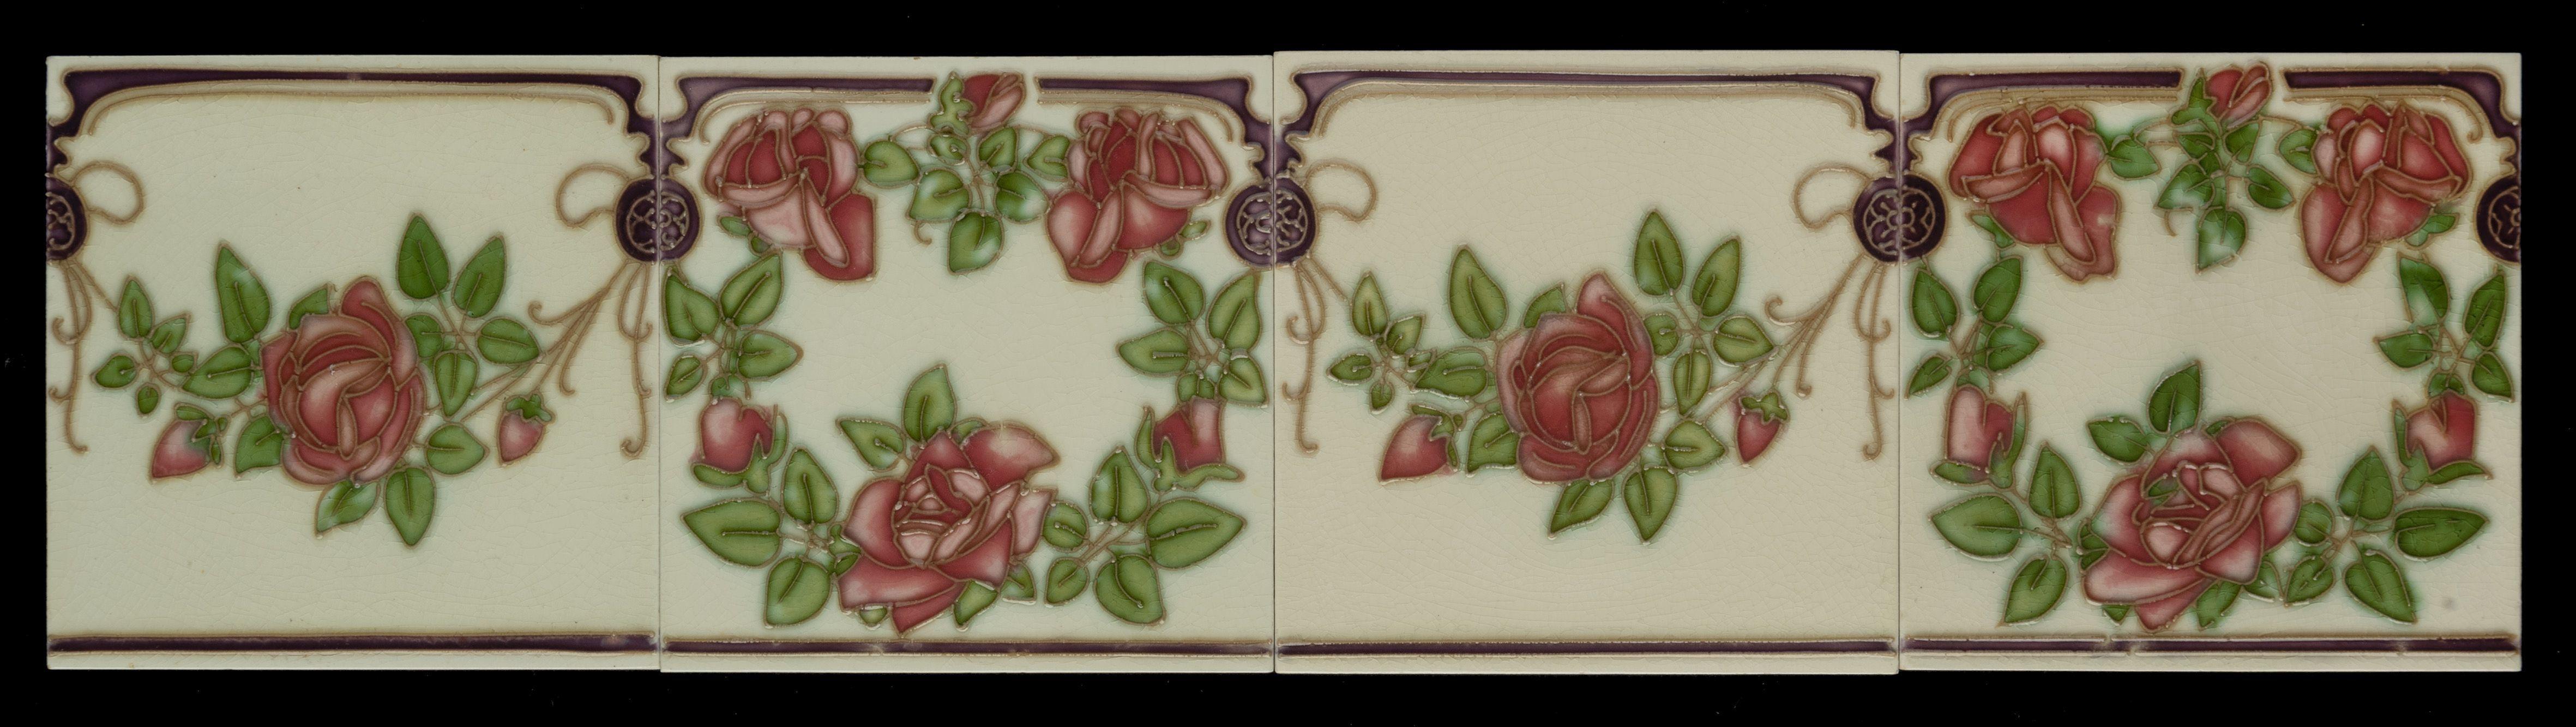 Glazed Set of 45 original Art Nouveau tiles decorated with roses C 1905 Belgium For Sale